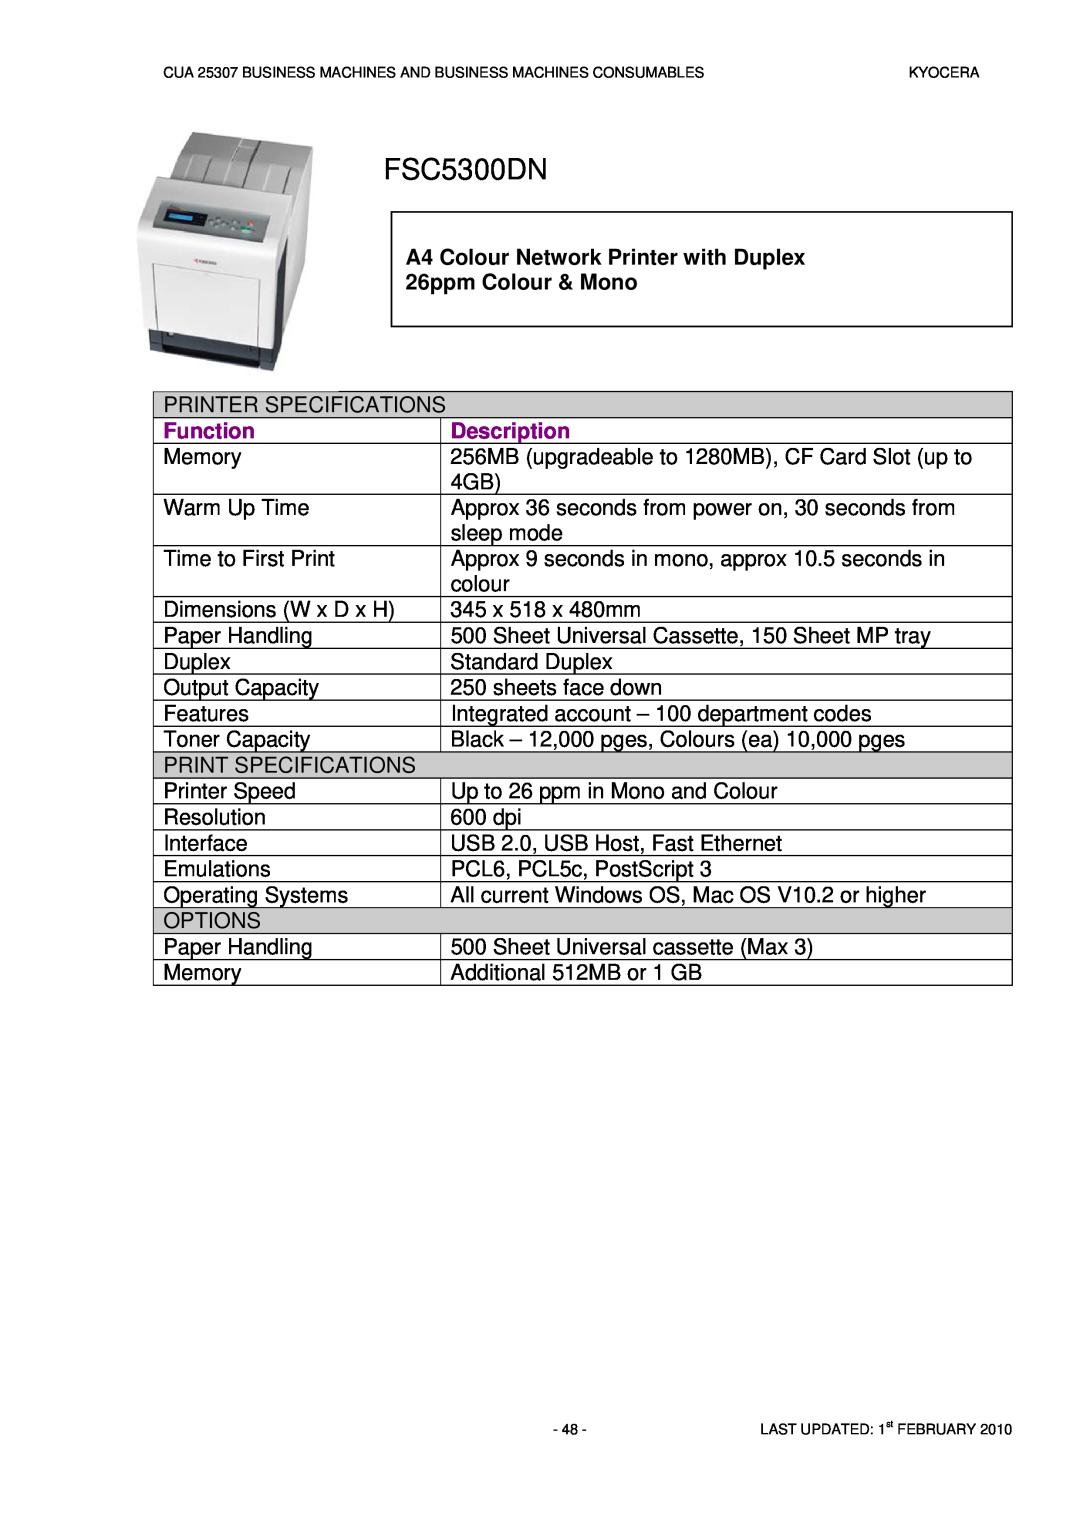 Kyocera CUA 25307 manual FSC5300DN, Function, Description 